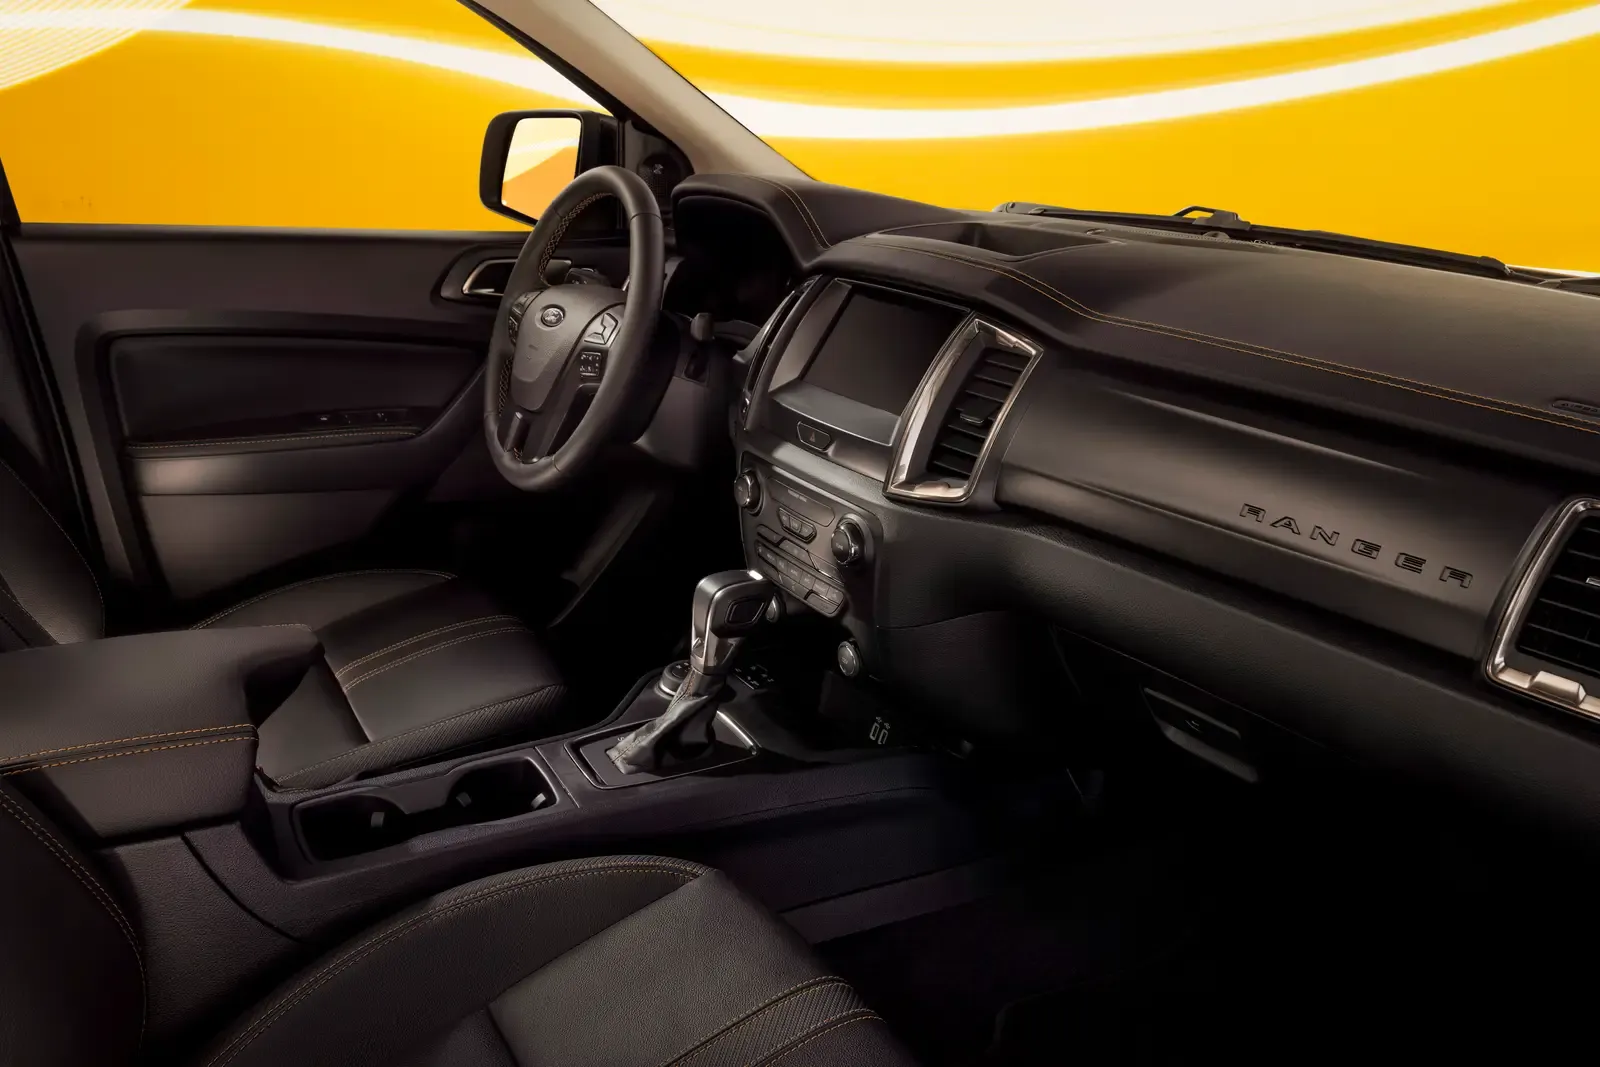 The 2022 Ford Ranger Splash Limited Edition's Interior